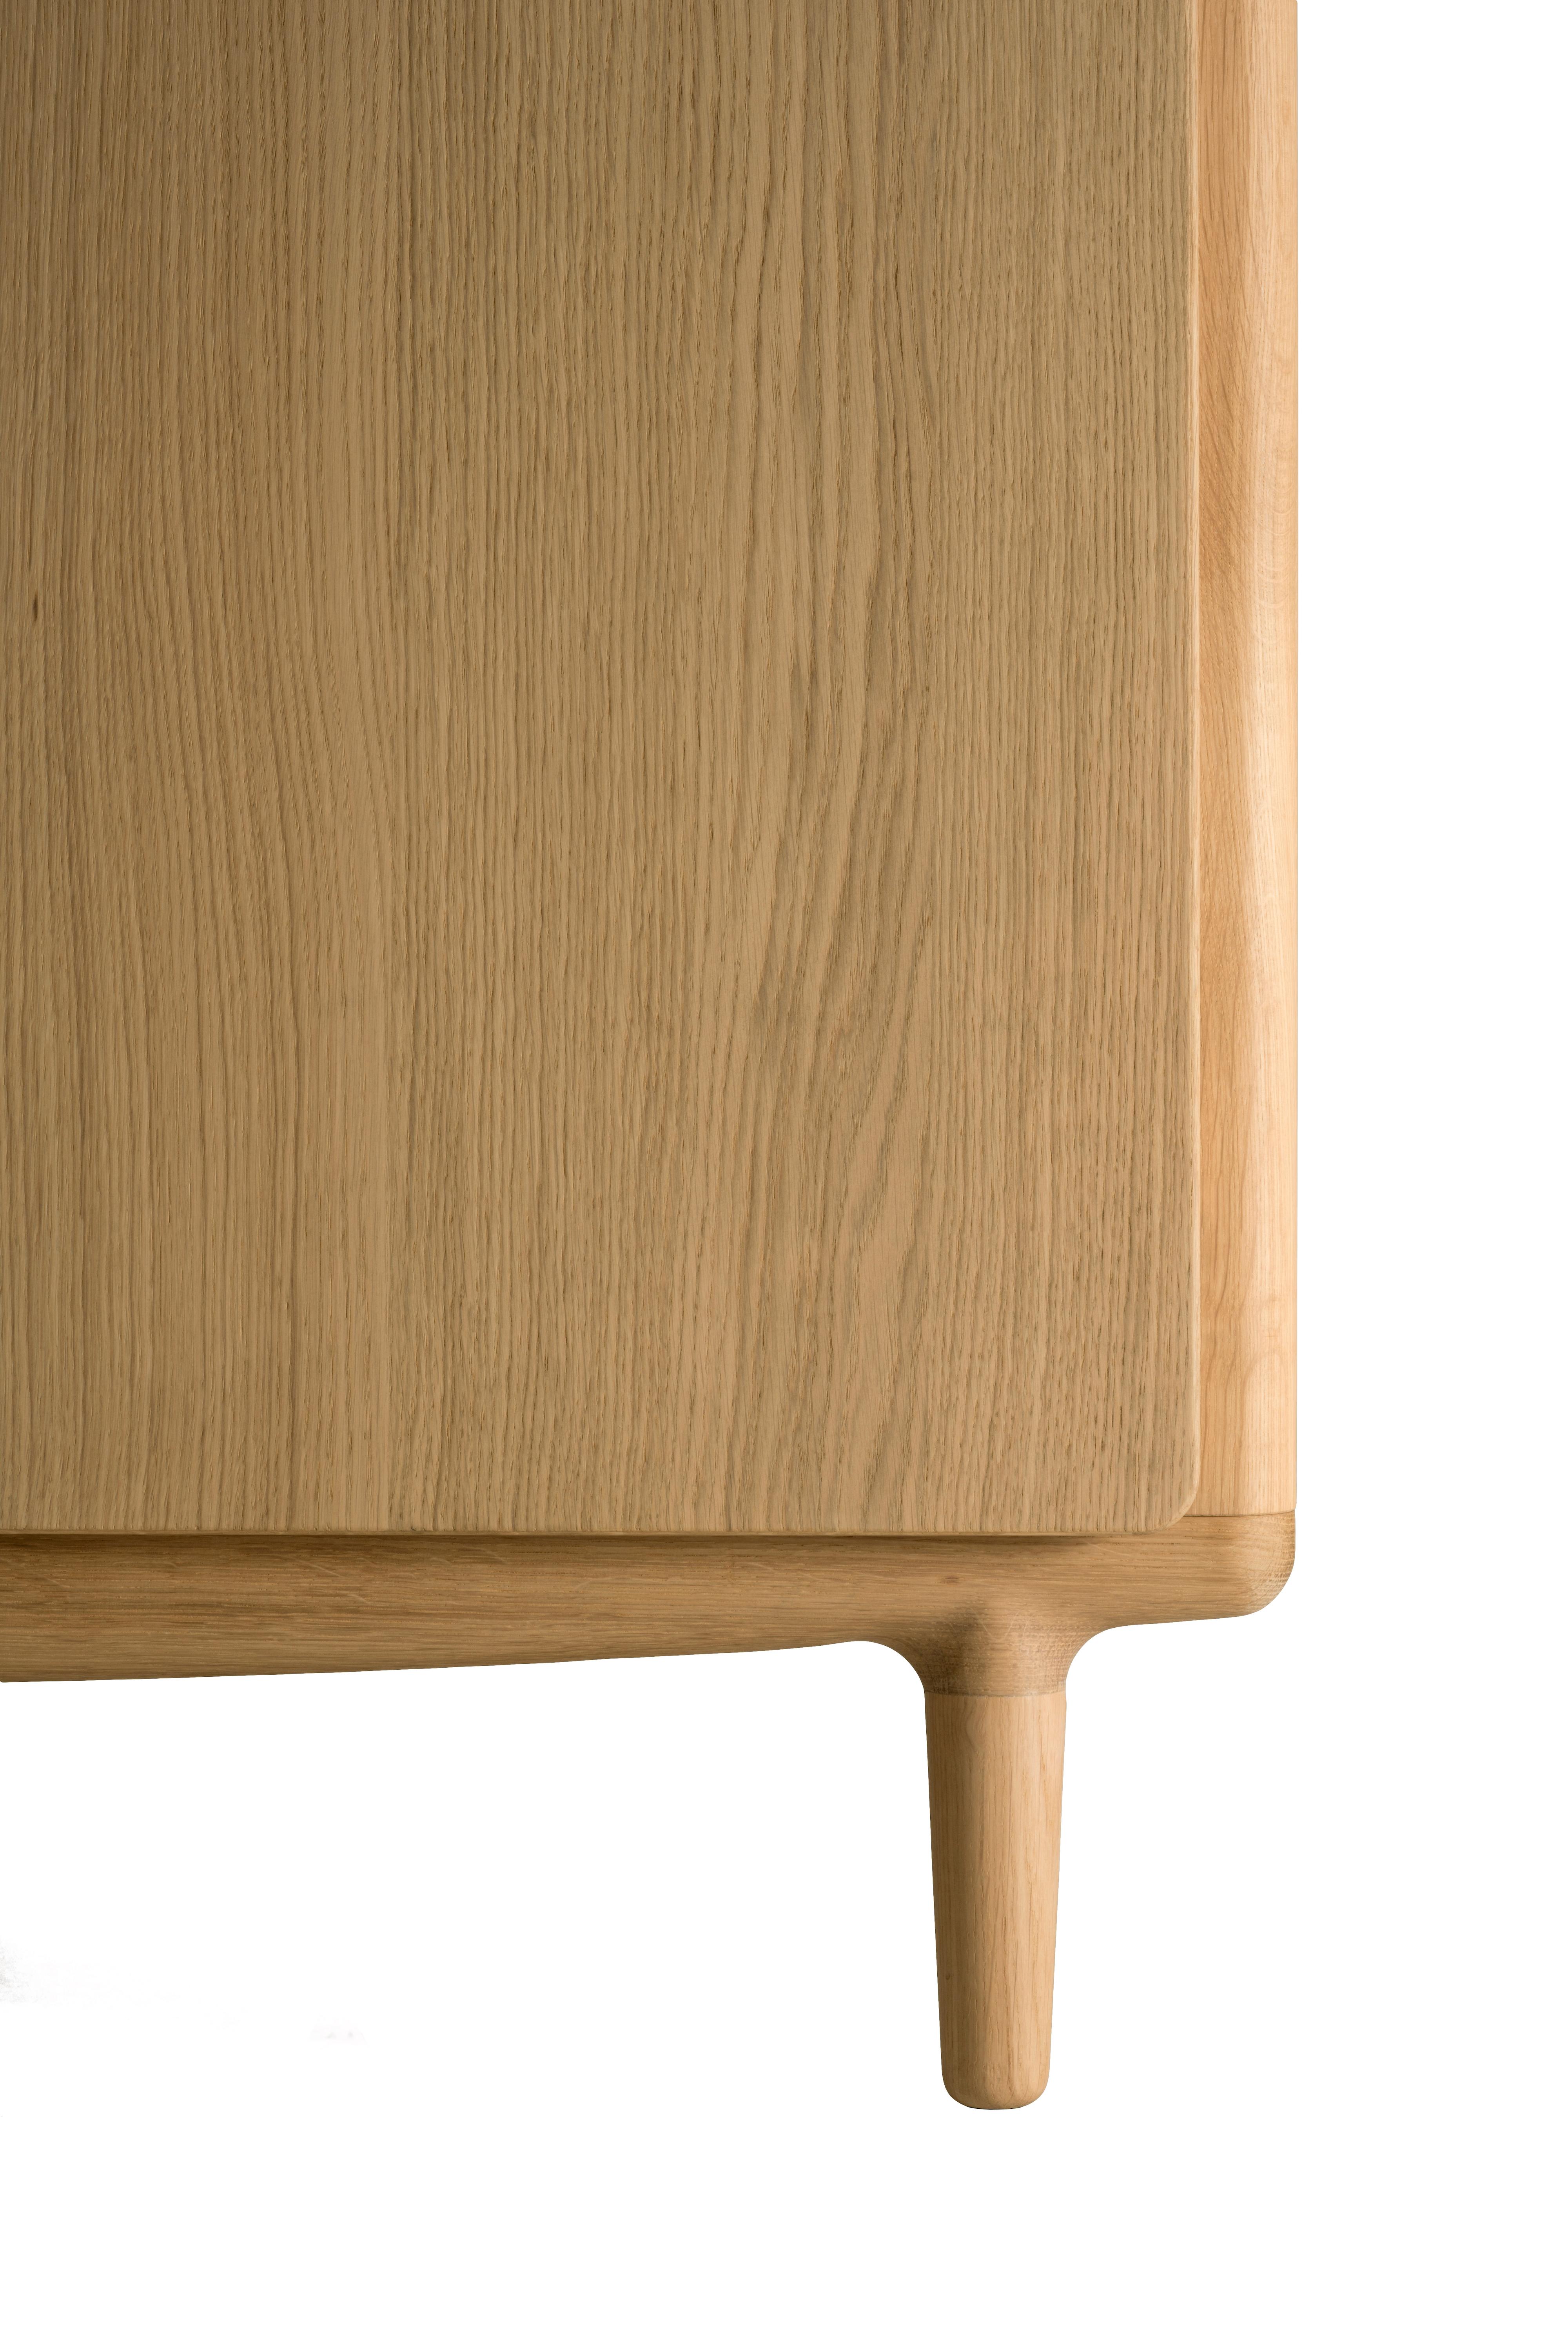 Contemporary Revised Falmer His - solid oak cupboard For Sale